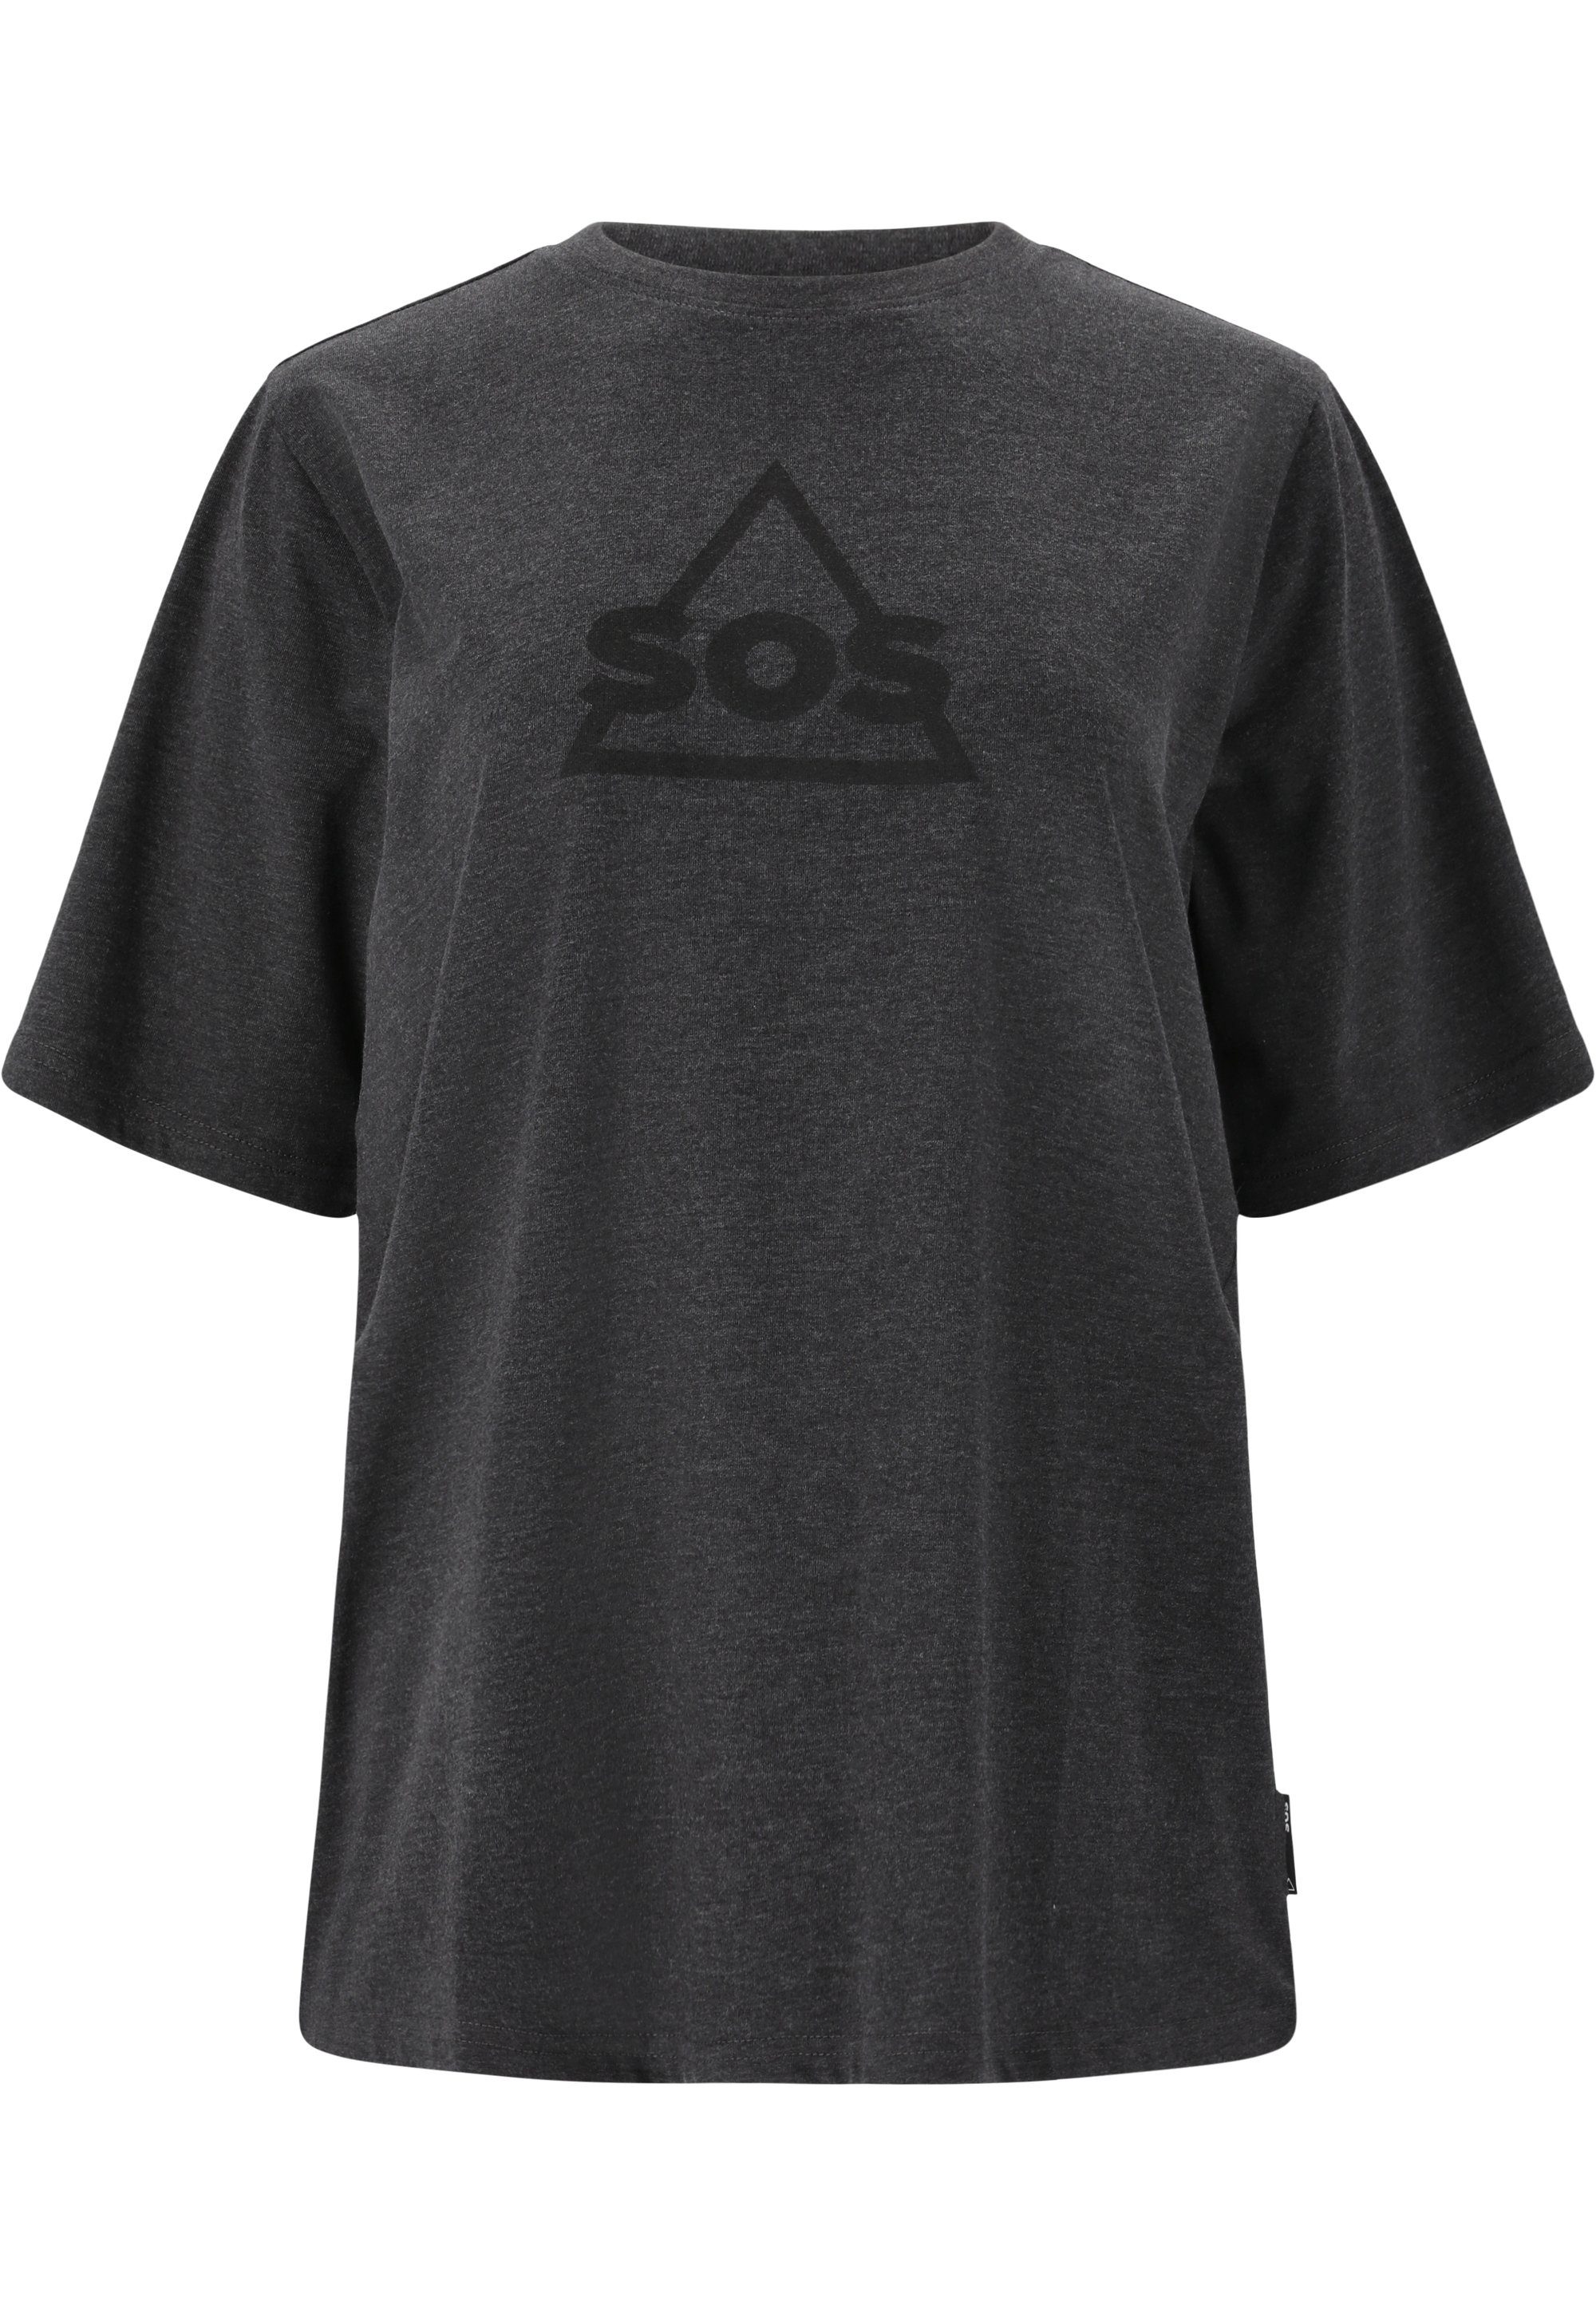 SOS Funktionsshirt Kvitfjell mit Front trendigem auf dunkelgrau der Markenlogo